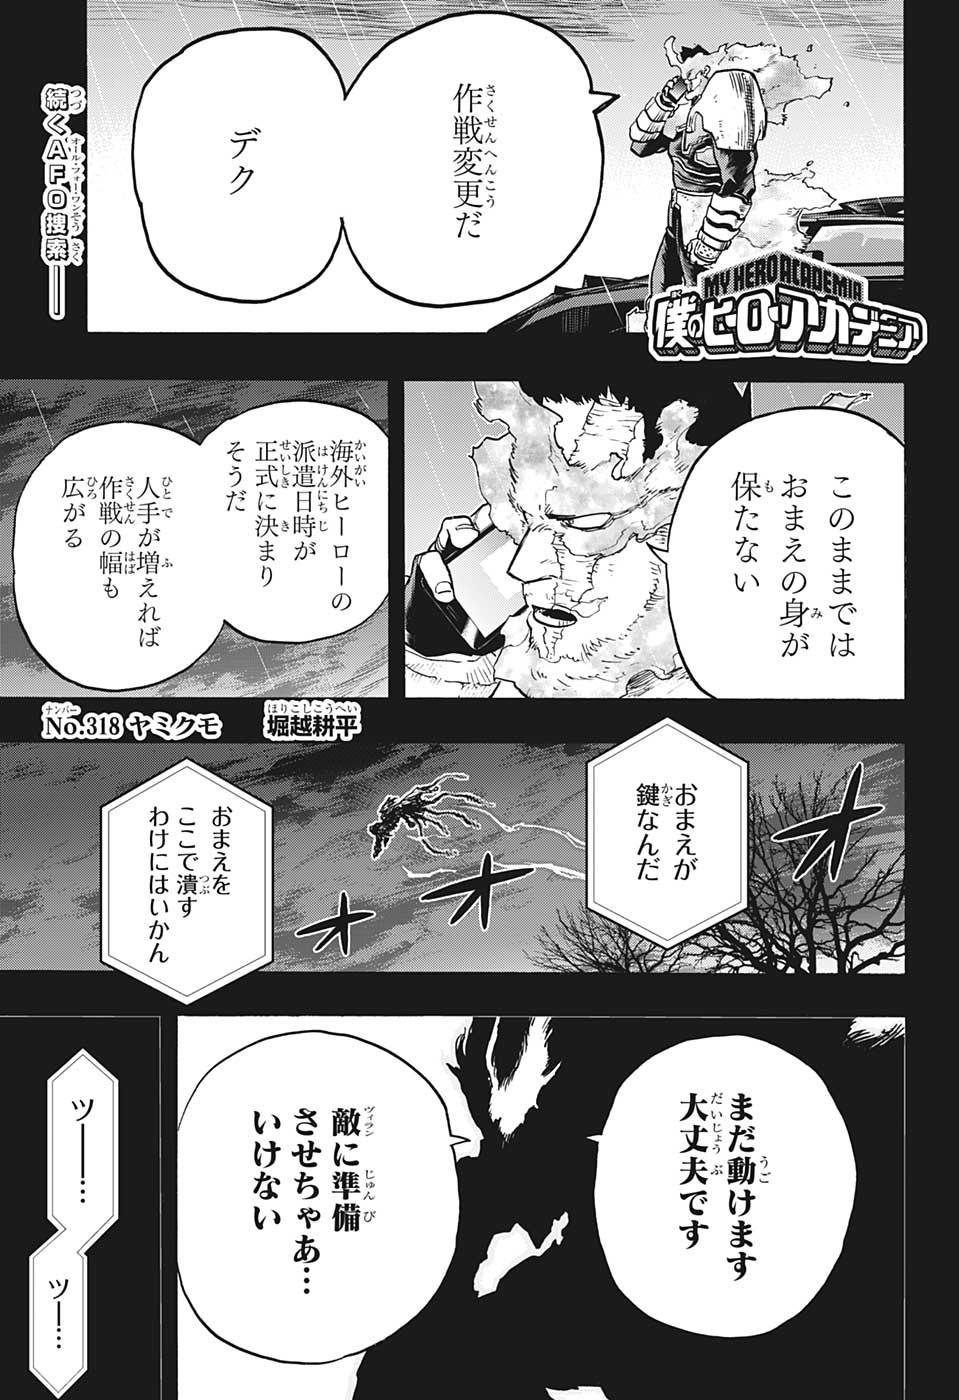 Boku no Hero Academia - Chapter 318 - Page 1